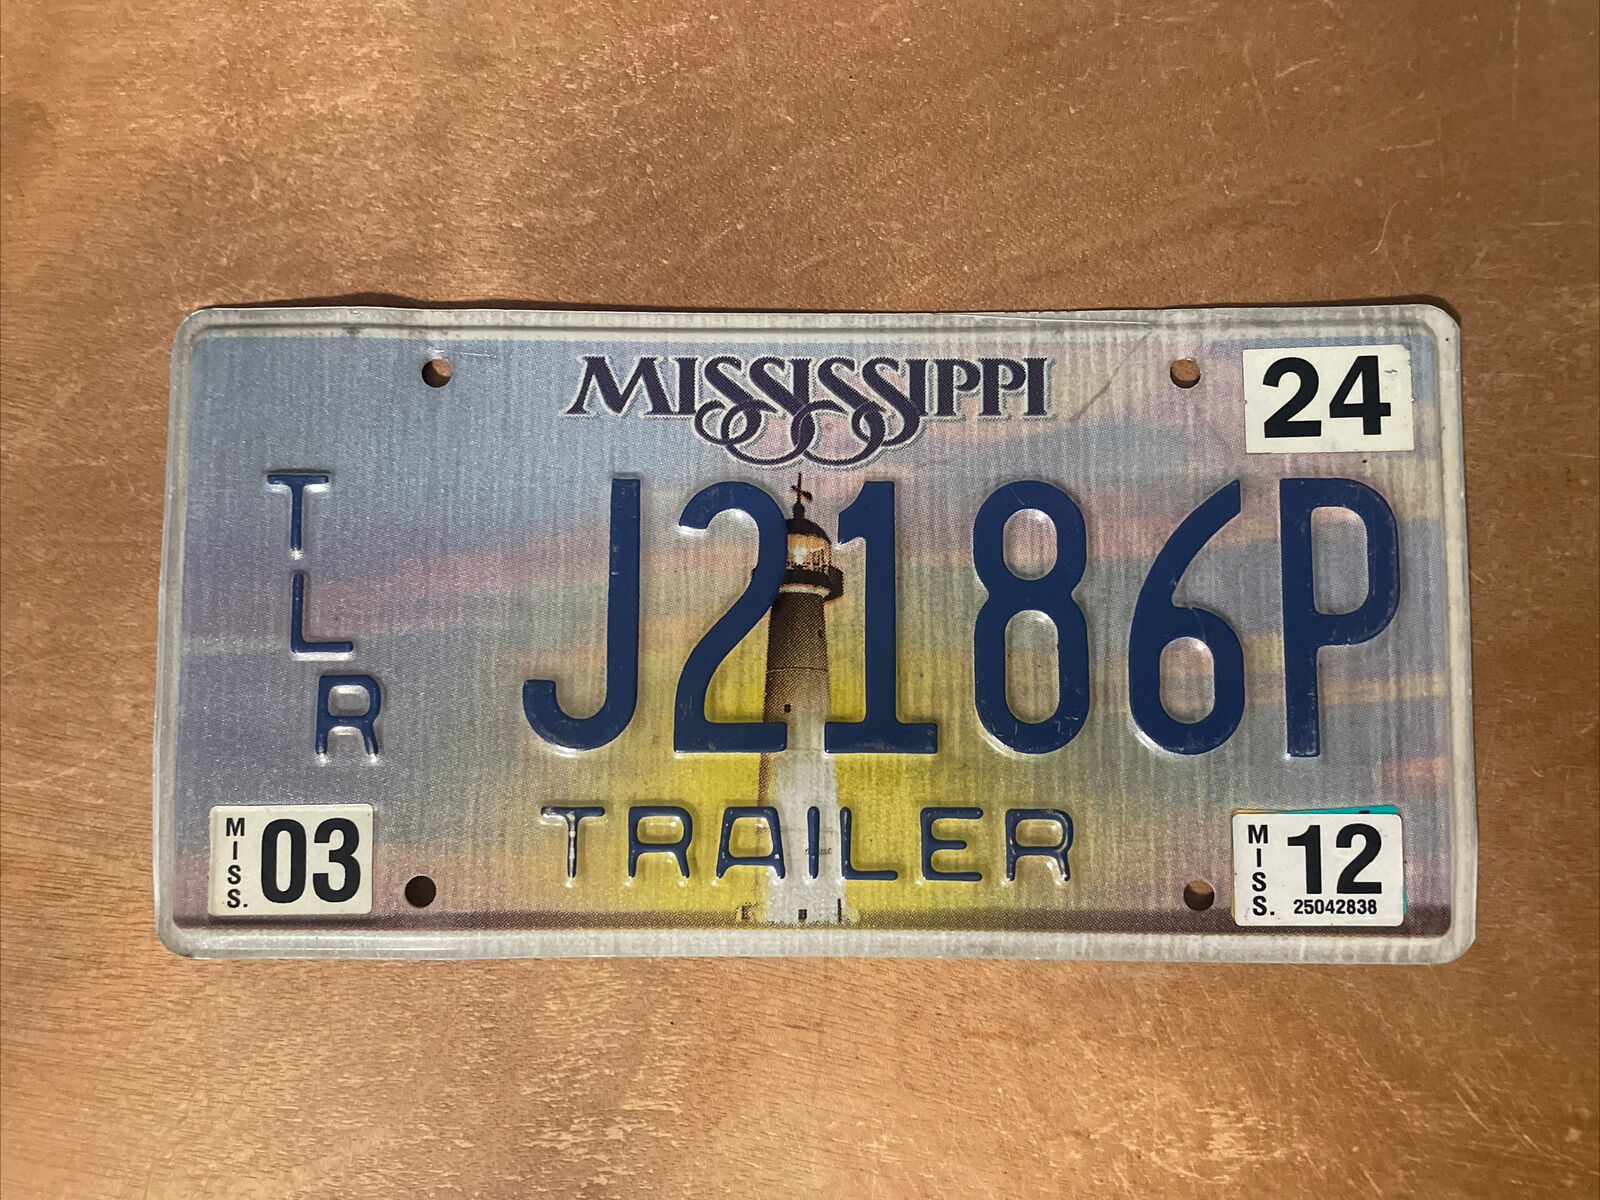 2012 Mississippi License Plate Trailer # J2186P